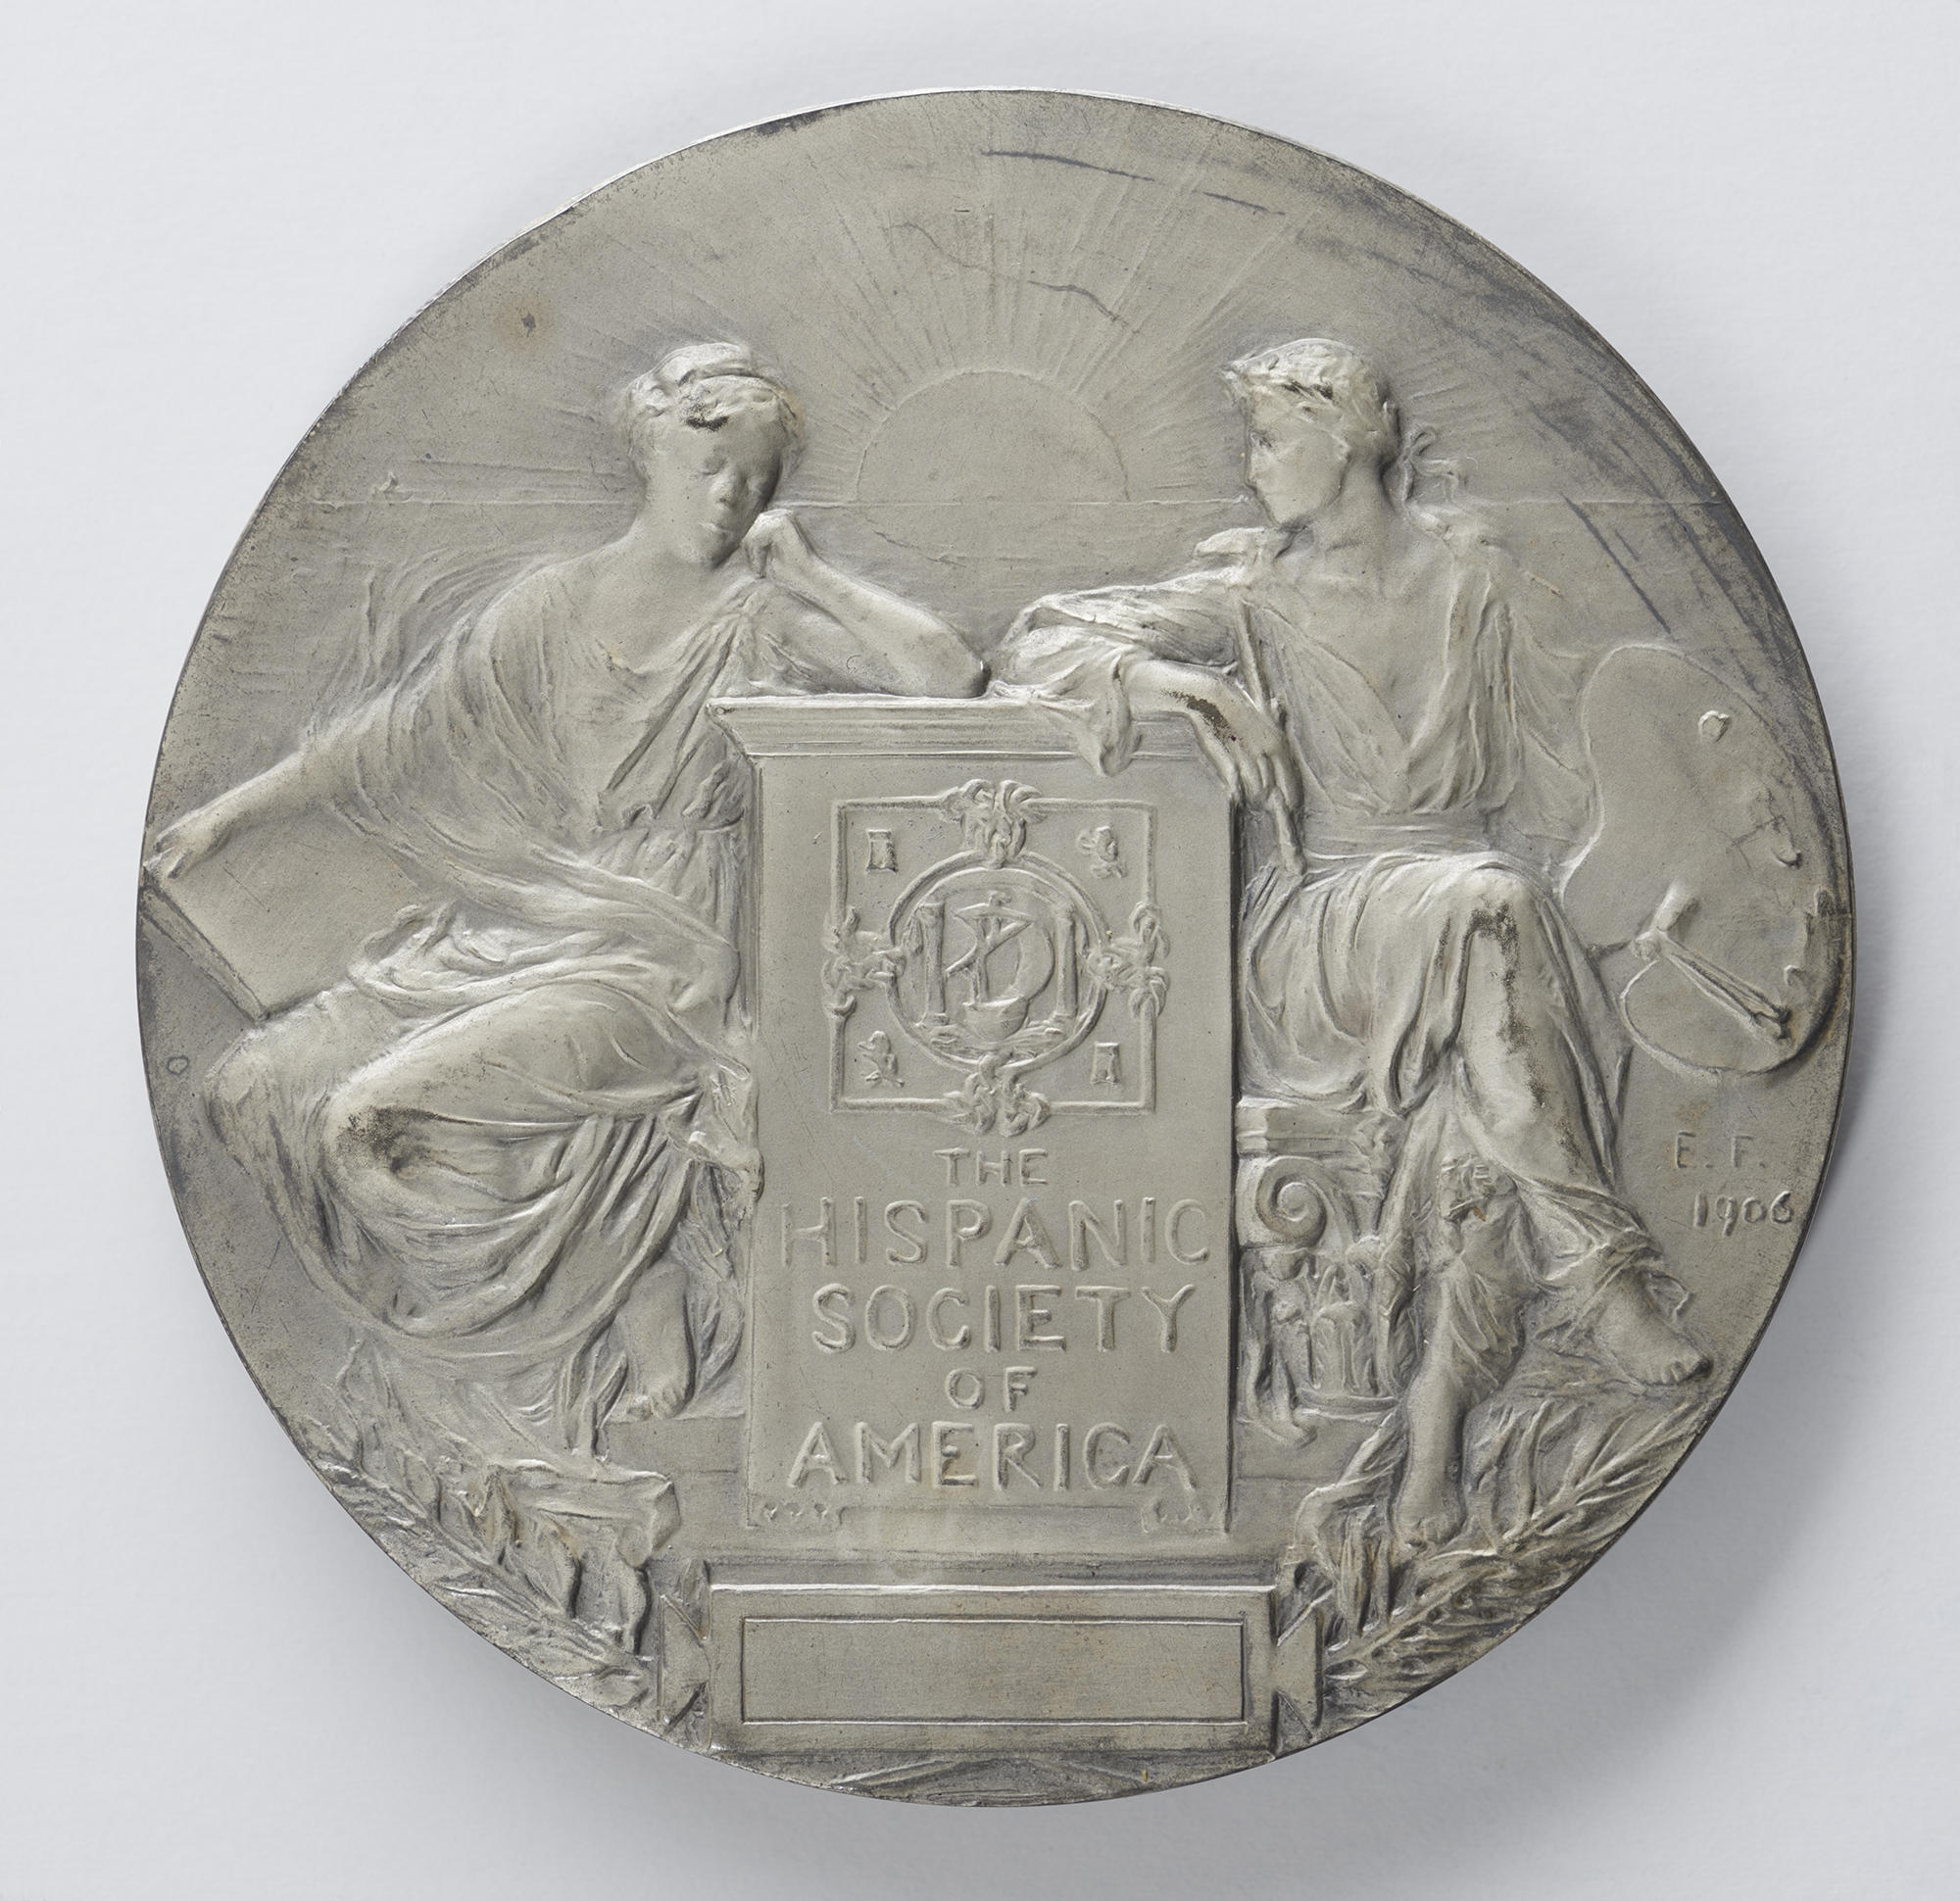 Hispanic Society of America Membership Medal (reverse)